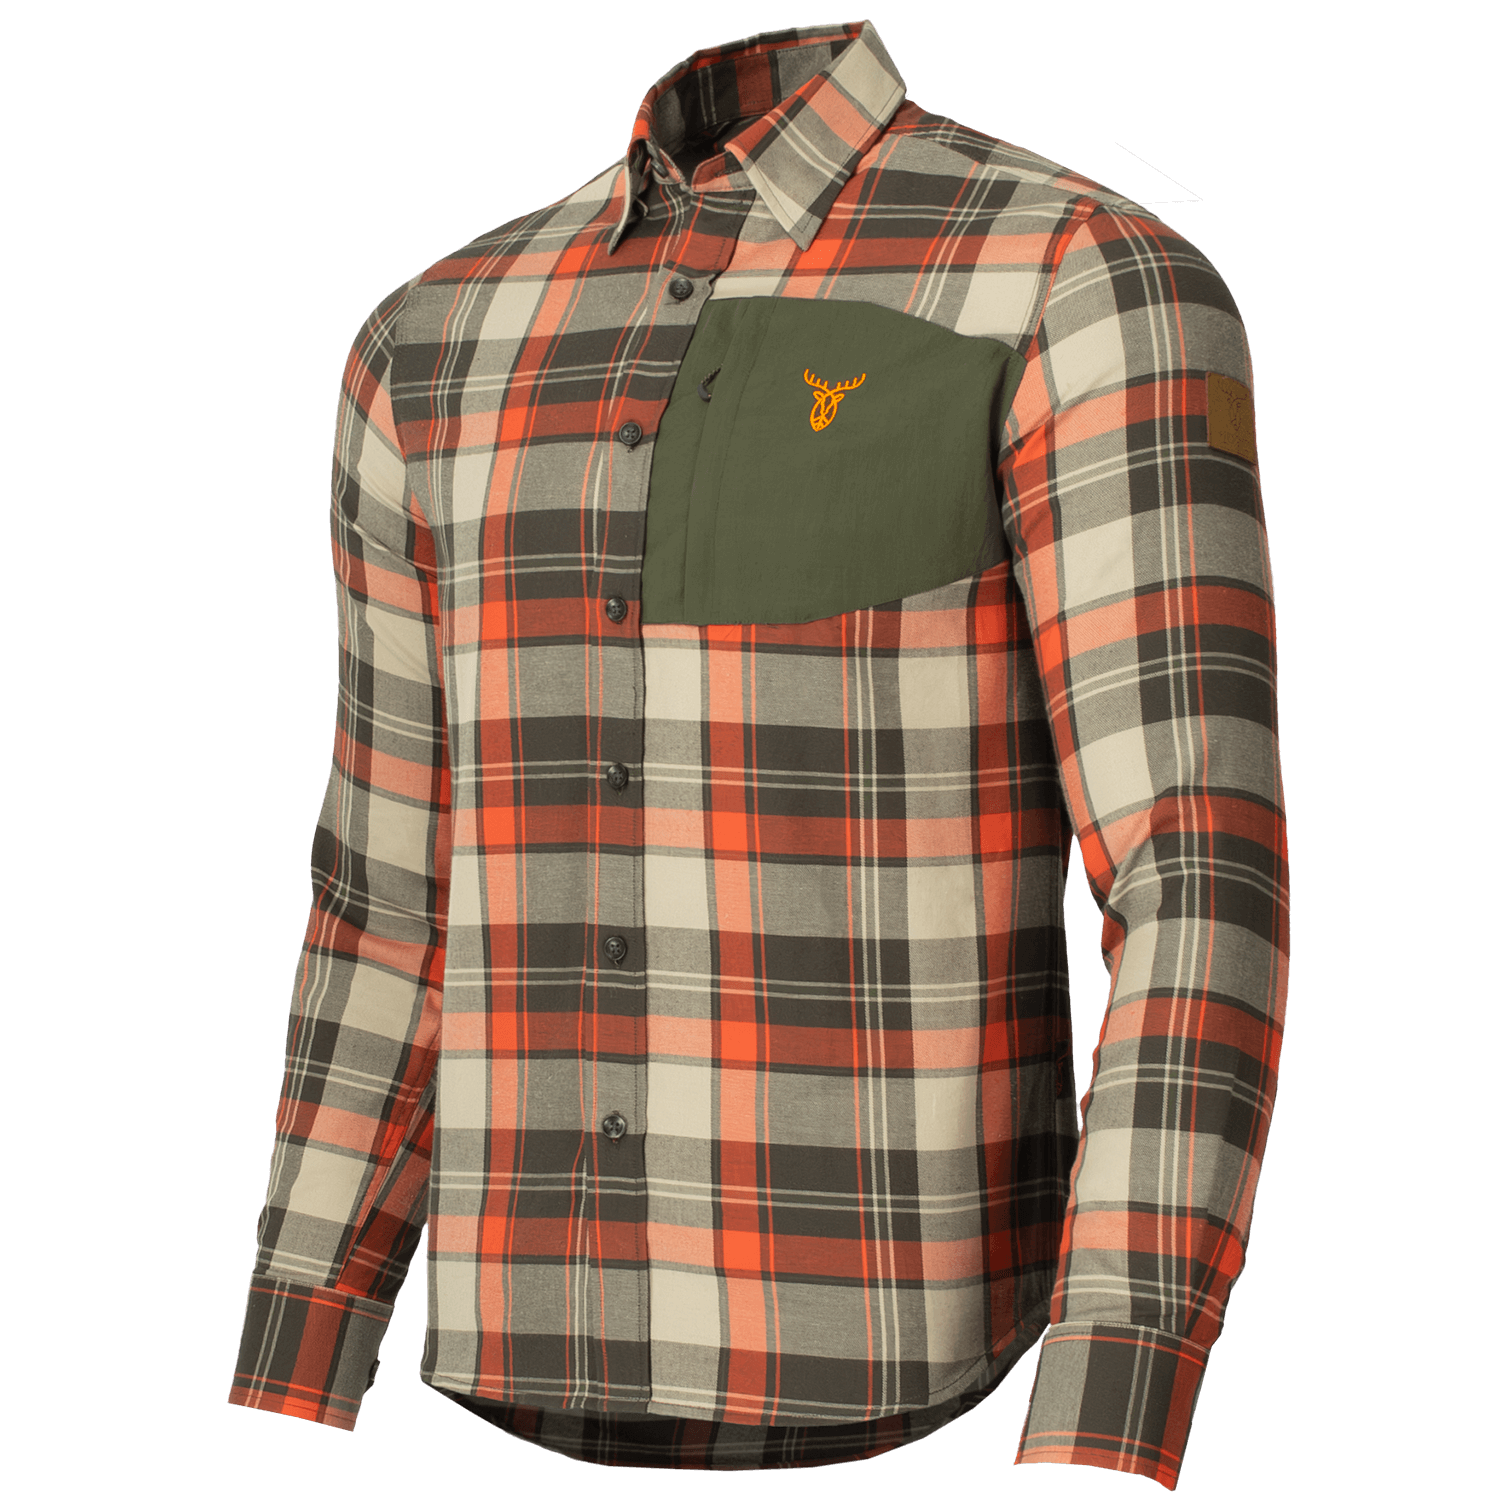  Pirscher Gear Veldhemd (Tanig Oranje) - Zomer jachtkleding